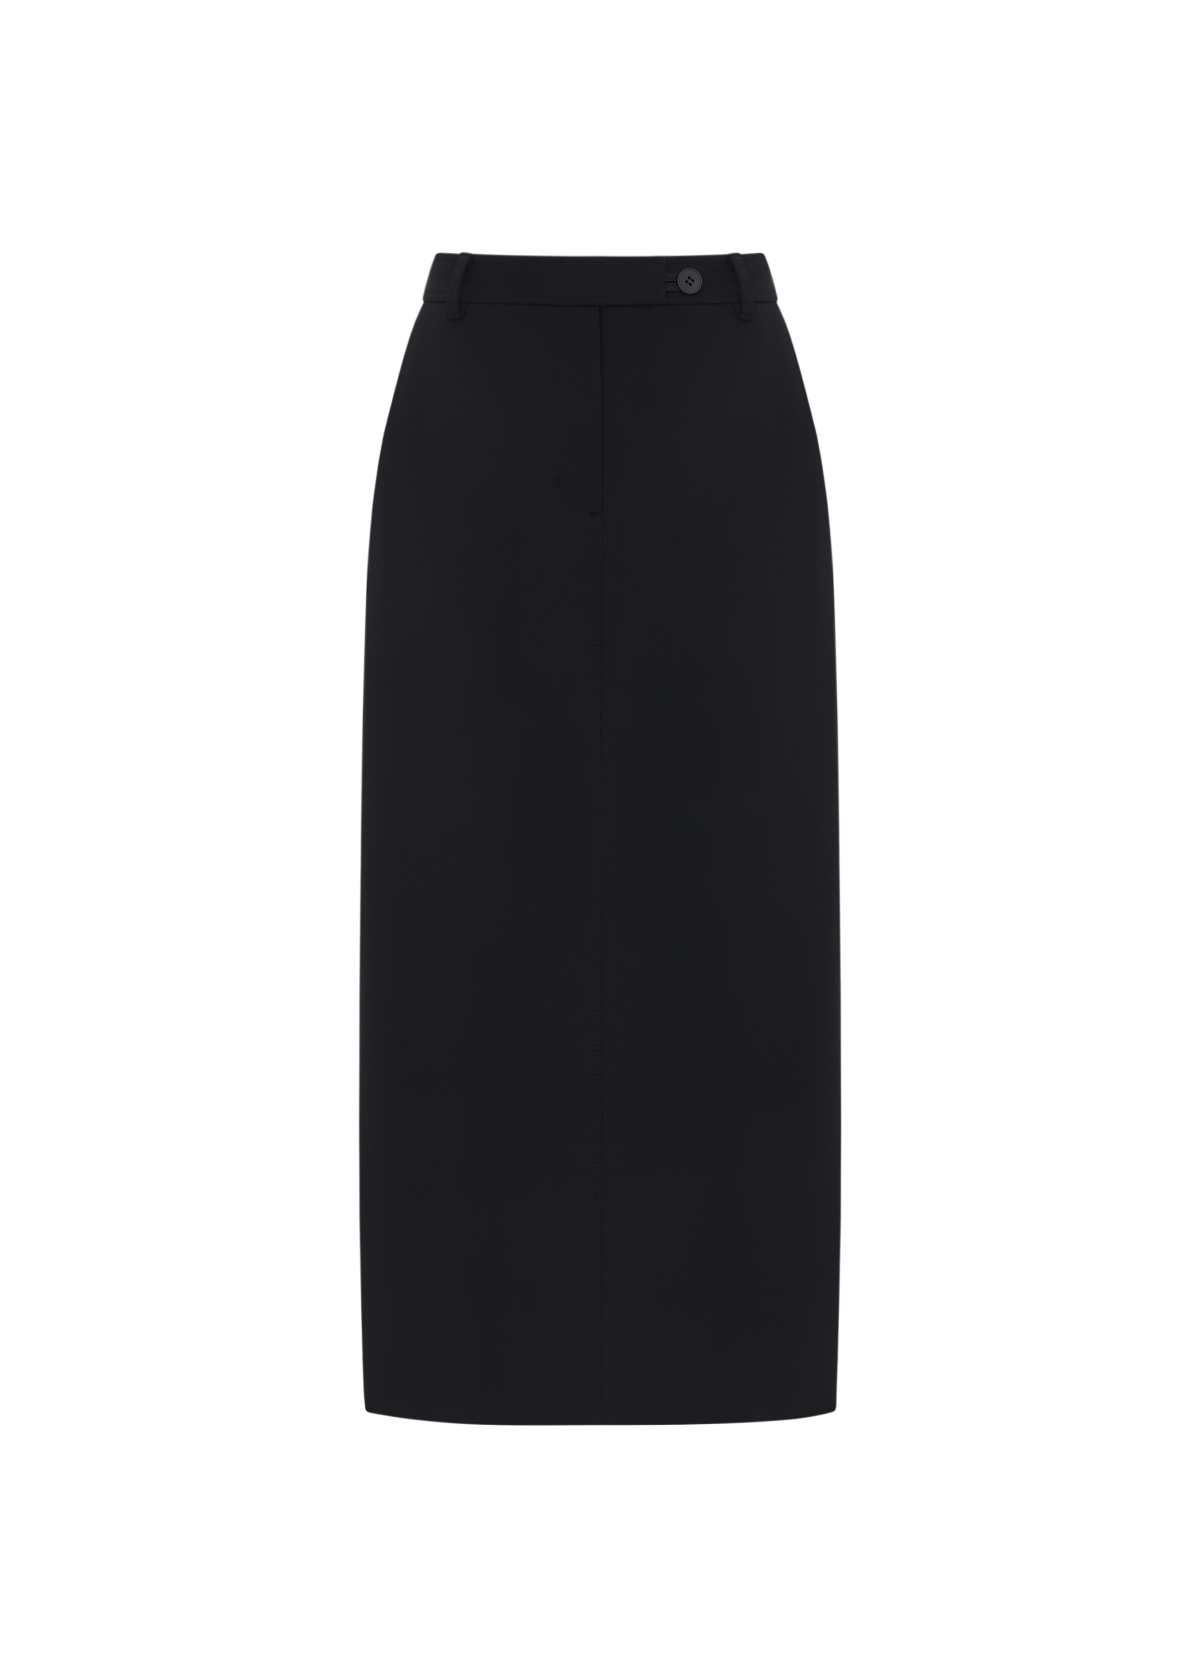 Maxi skirt in black